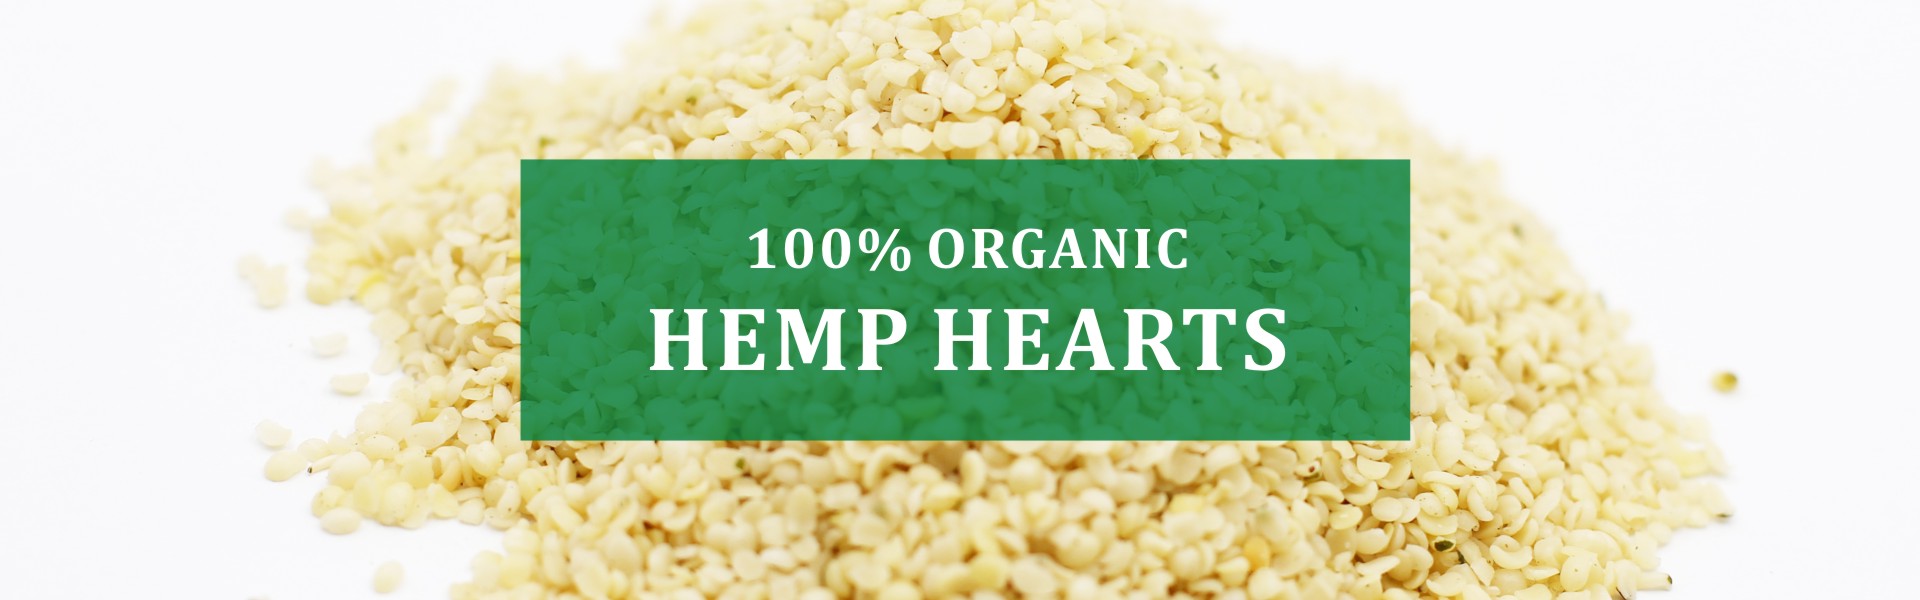 Organic hemp hearts